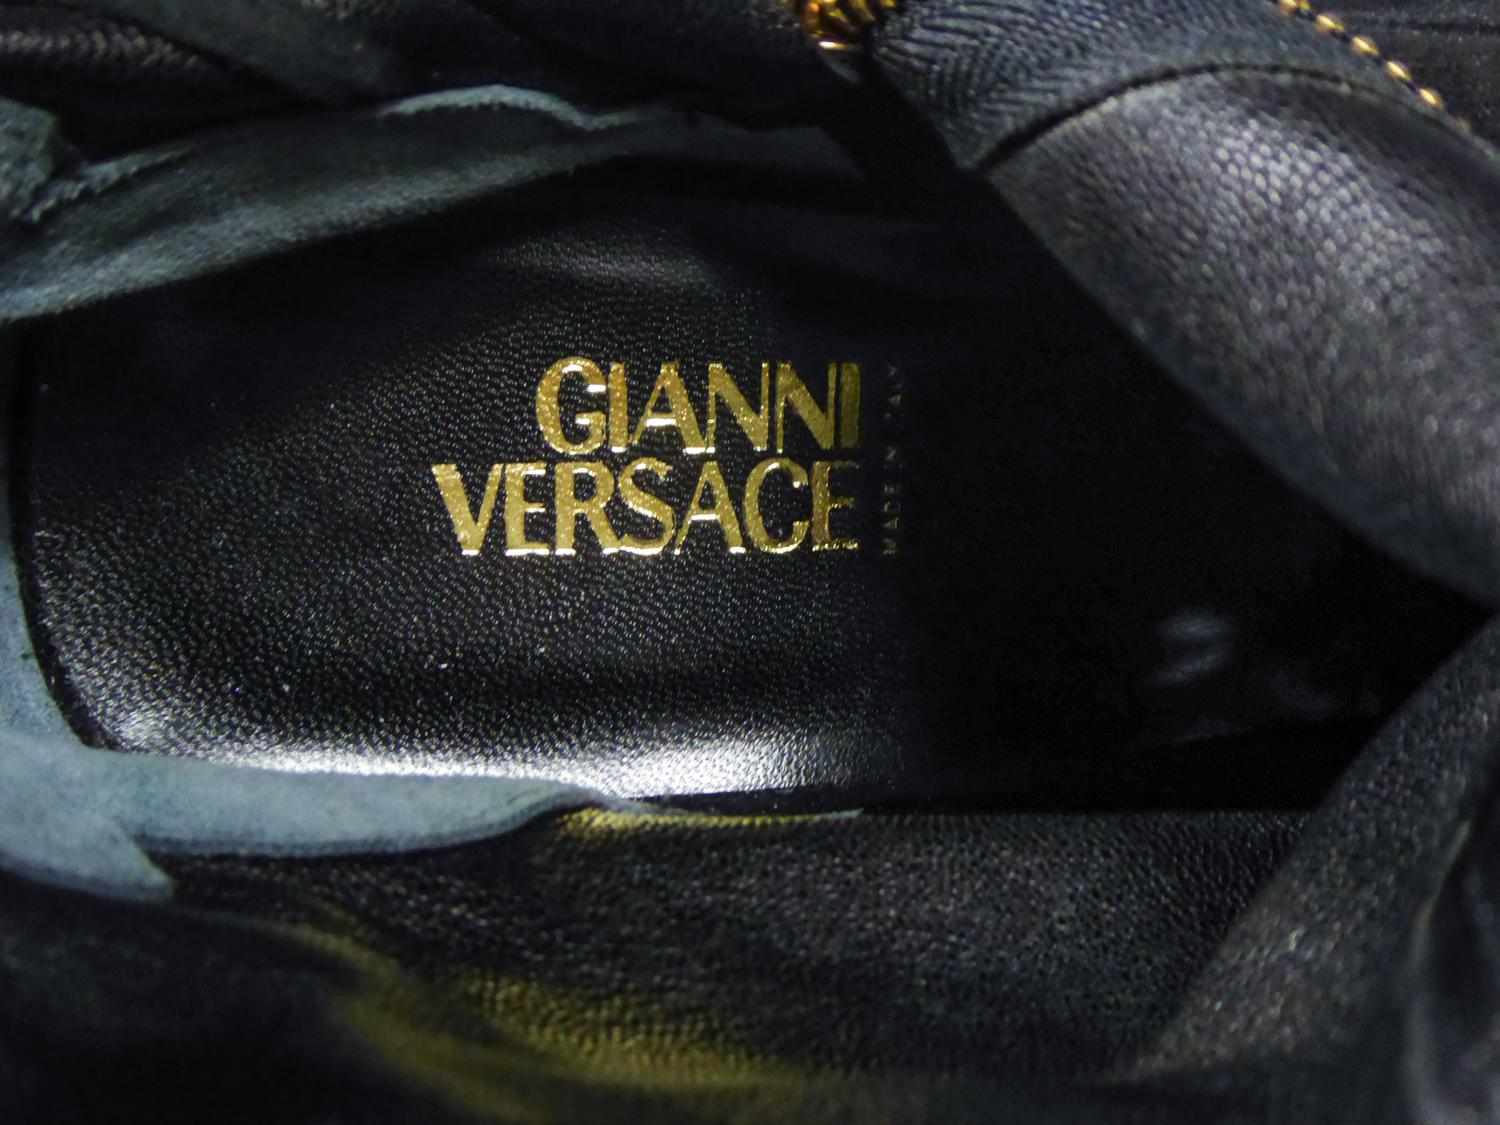 Bottes Gianni Versace en daim et strass Swarovski, circa 2000 en vente 9